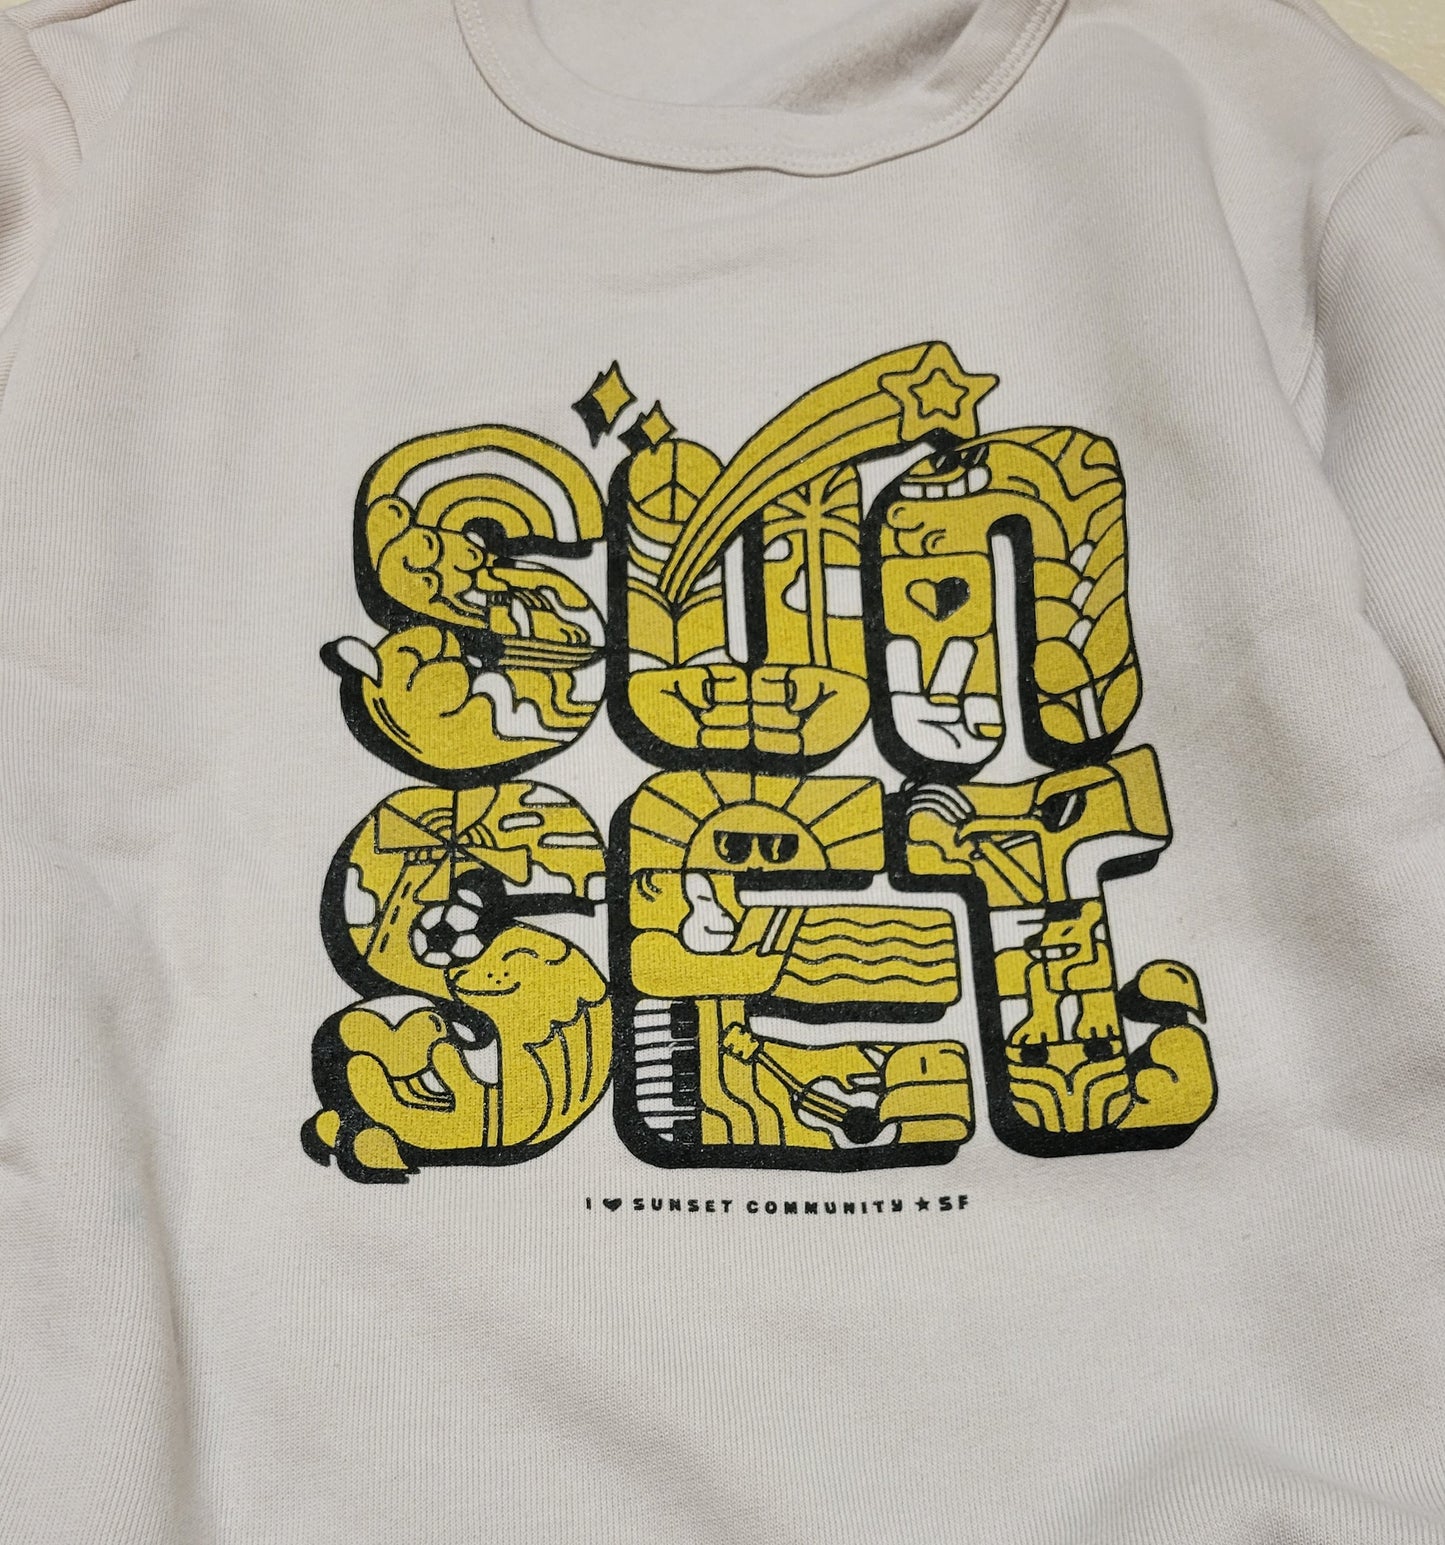 Sunset Adult Community Sweatshirt in Cream